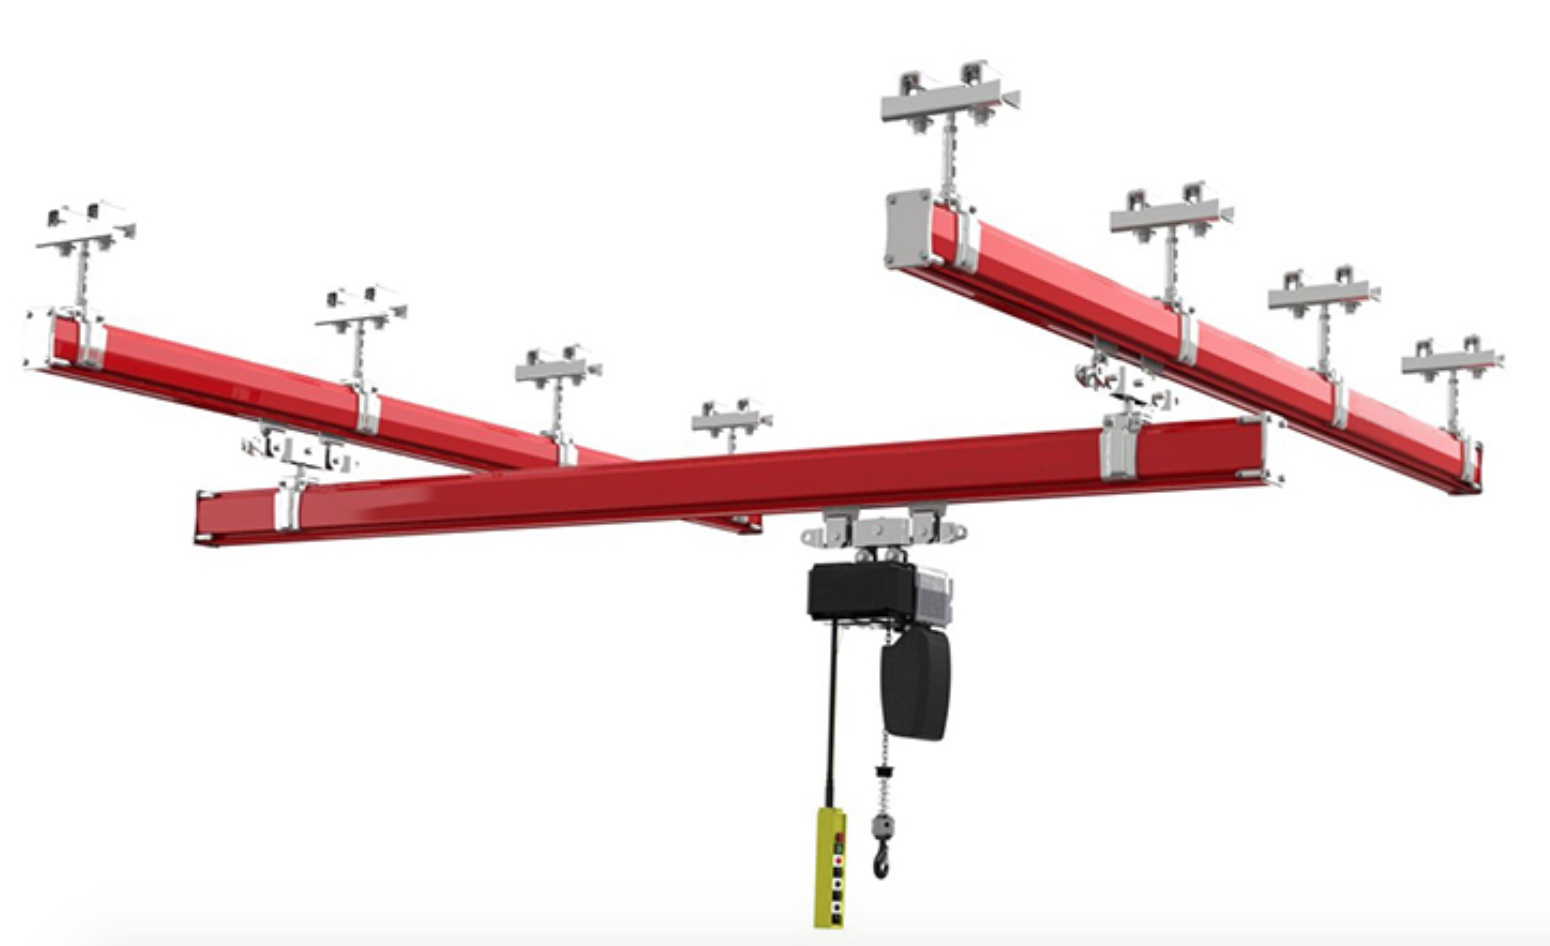 New Type Flexible Combined Light KBK Crane for Warehouse, Workshop Using